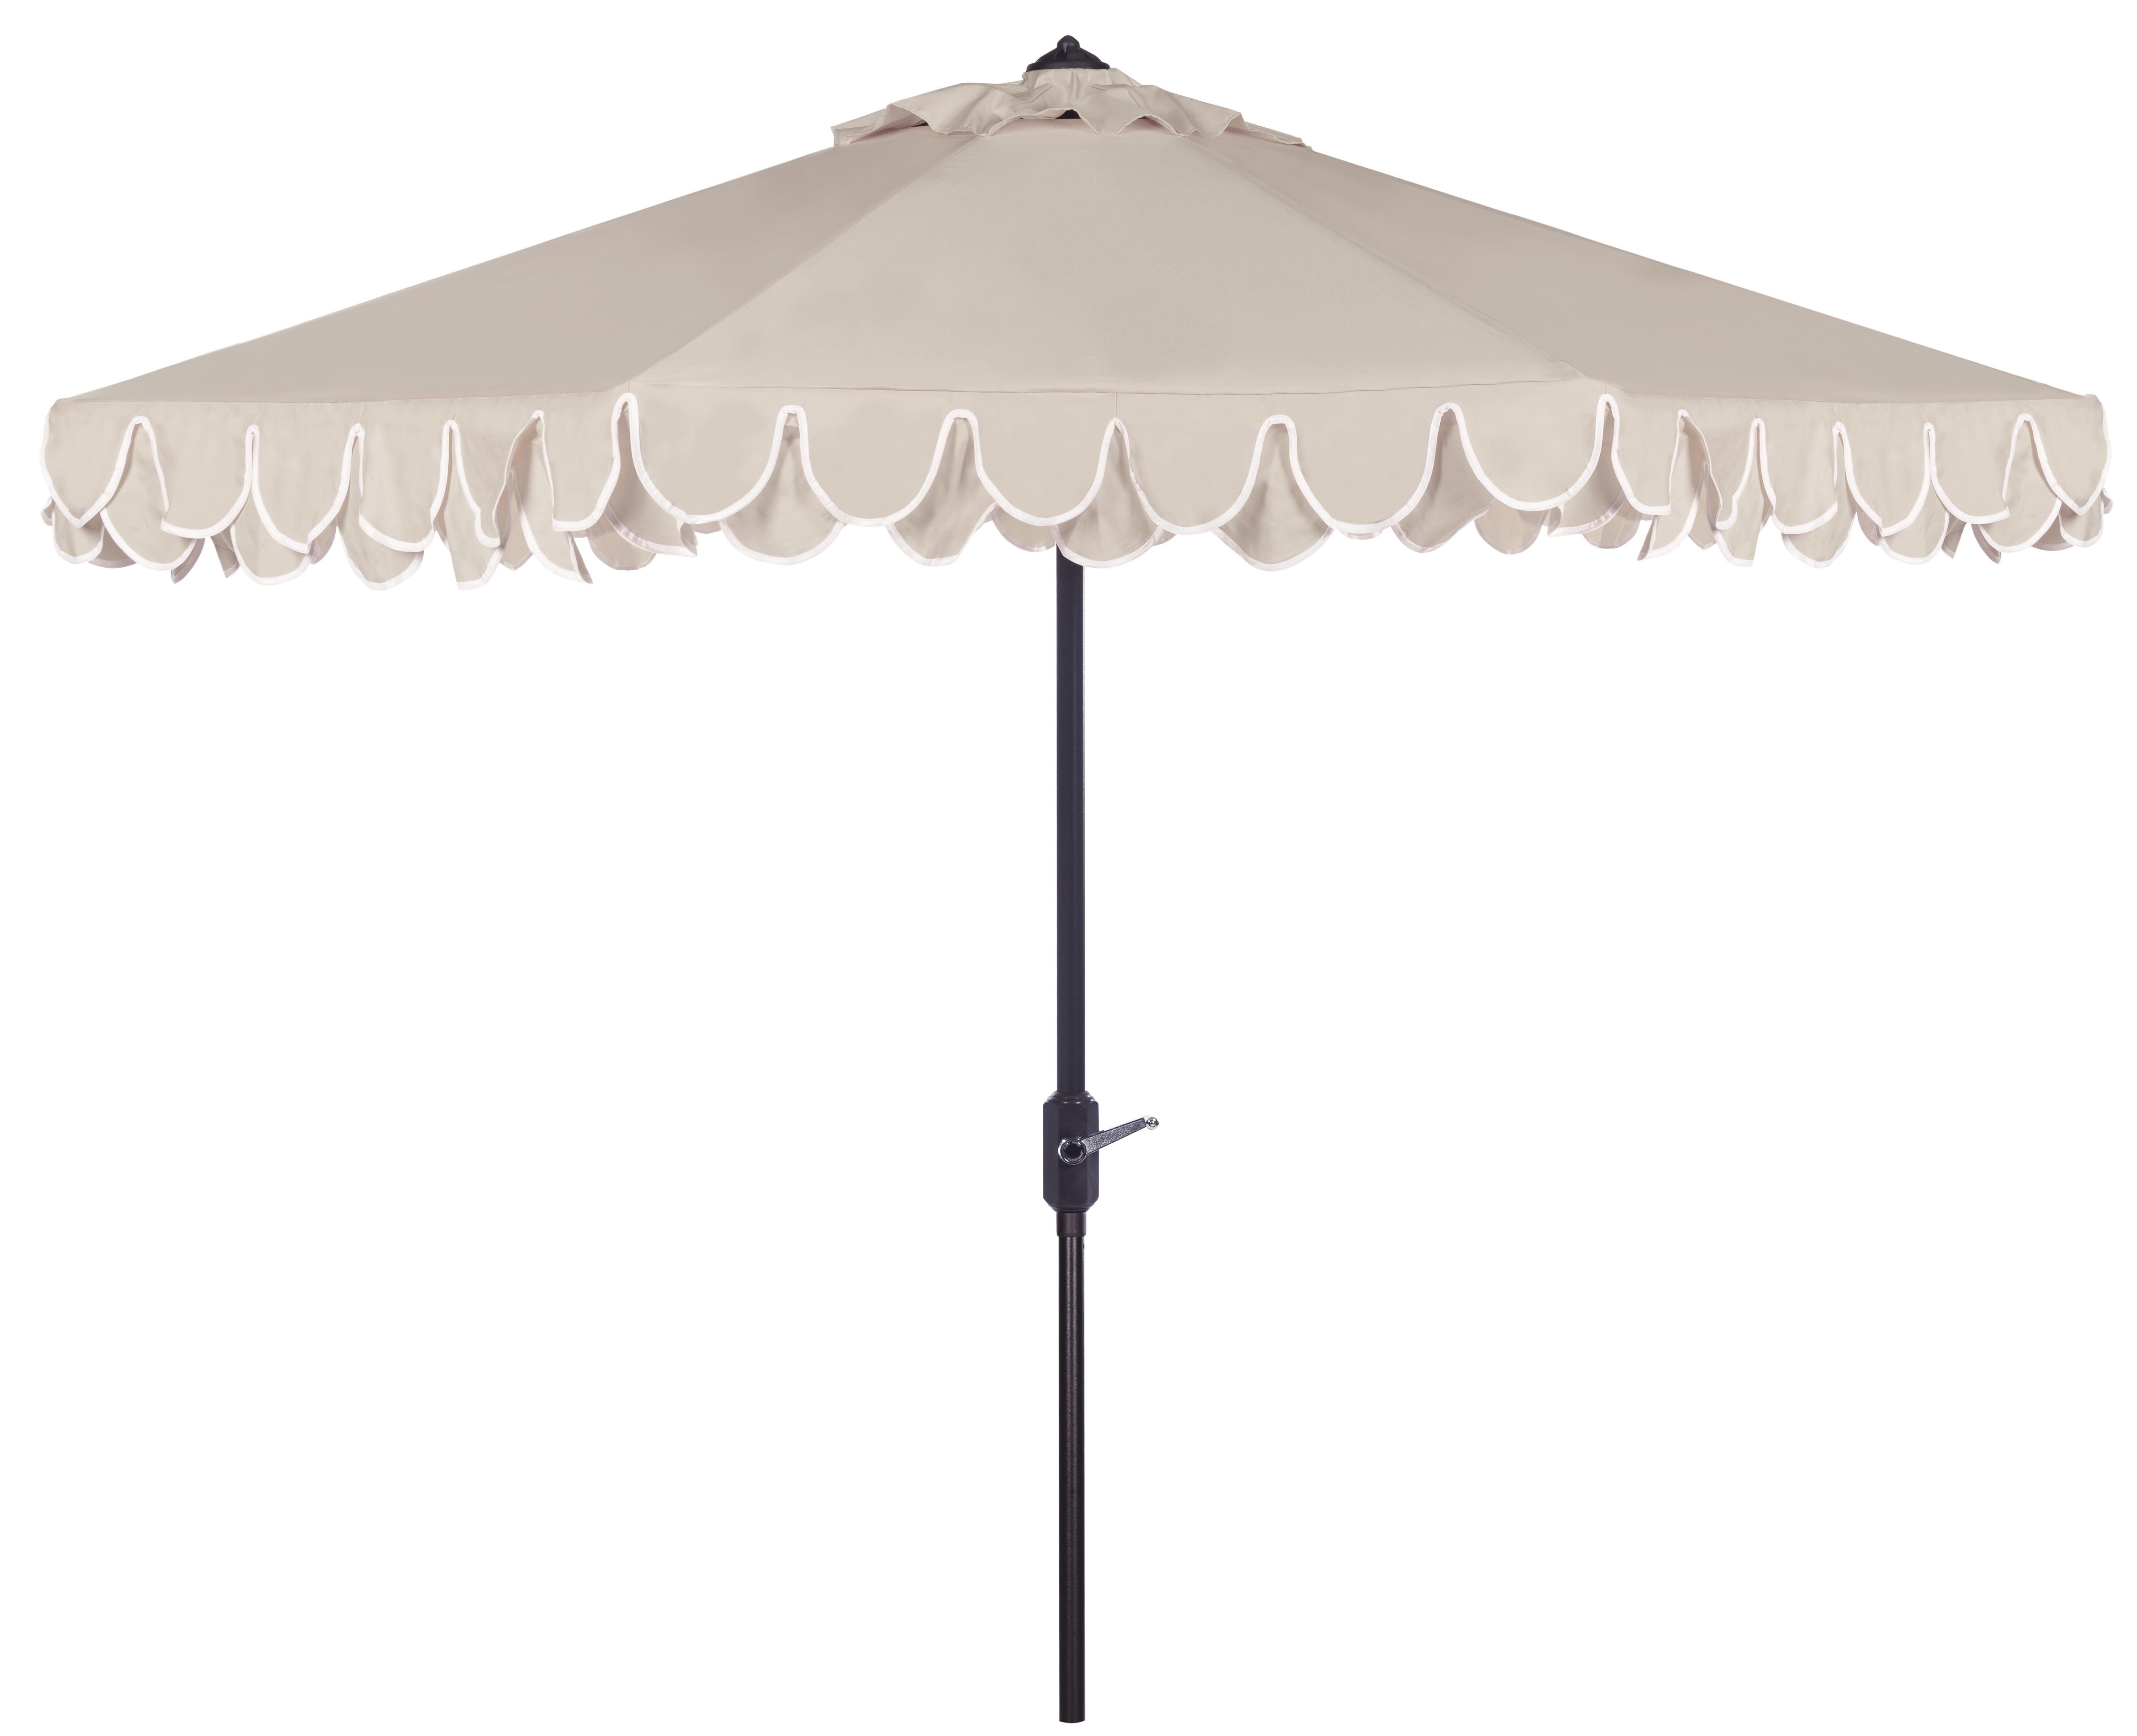 Uv Resistant Elegant Valance 9Ft Auto Tilt Umbrella - Beige/White - Arlo Home - Image 0